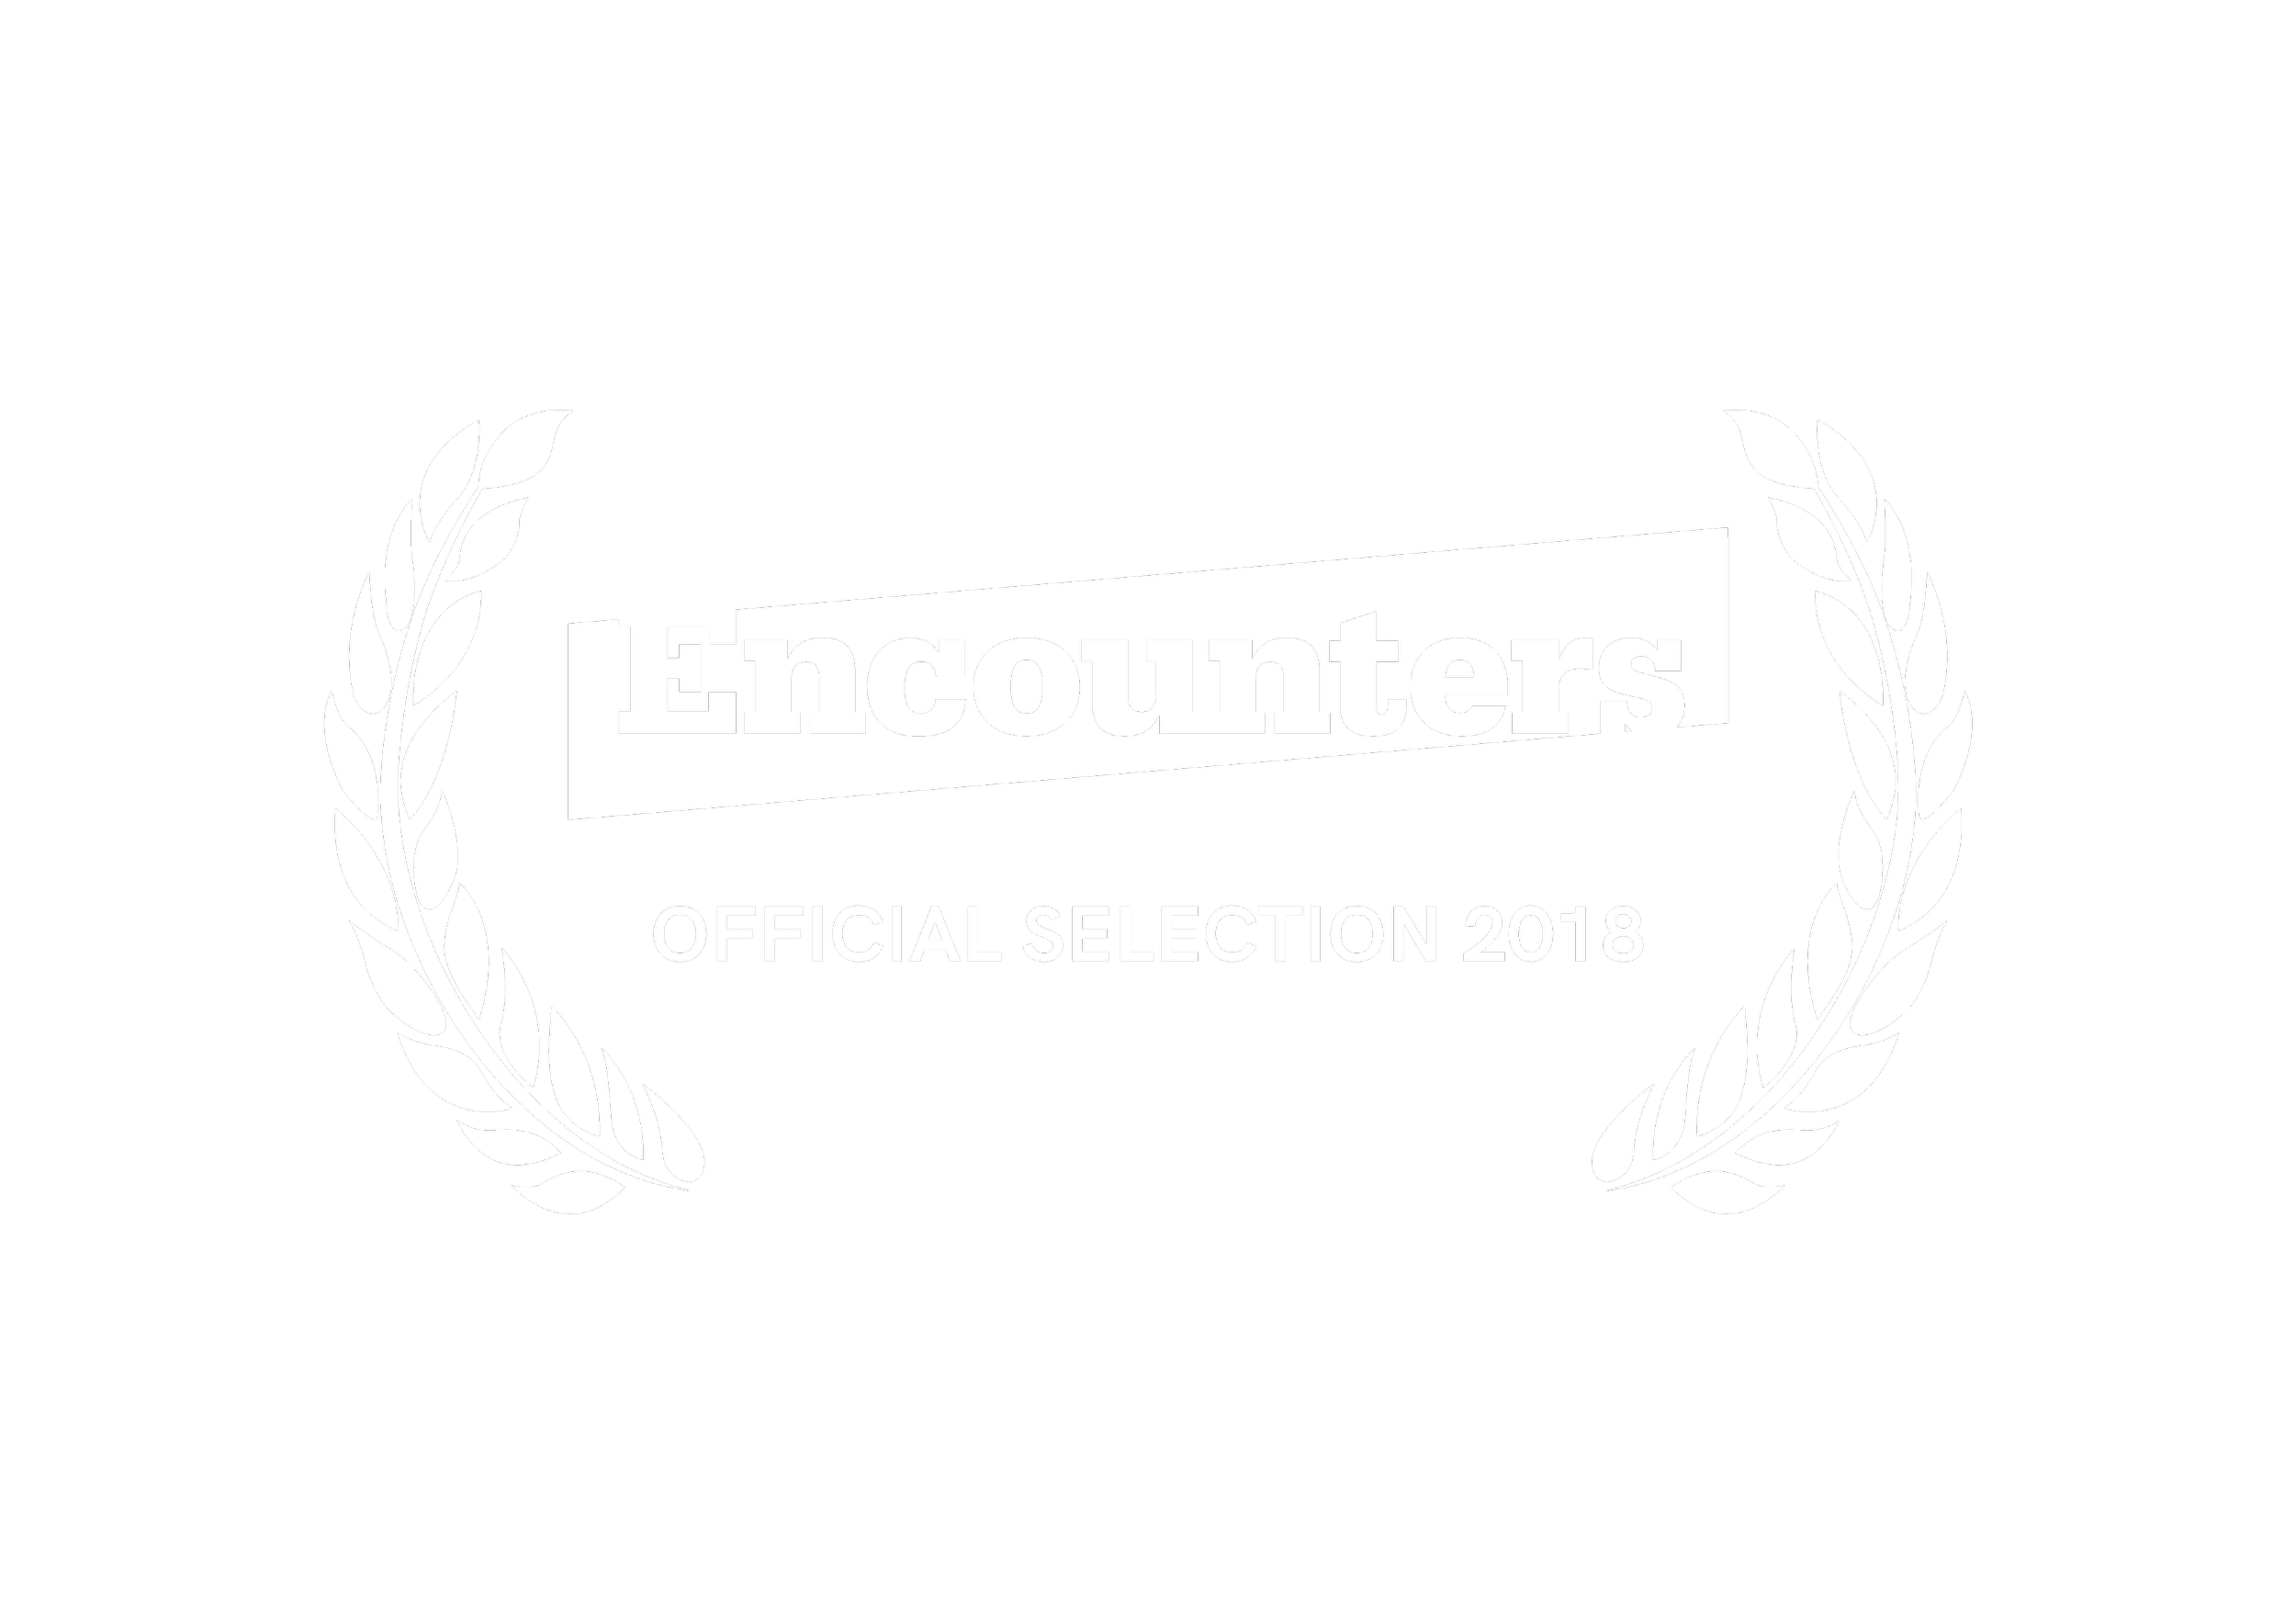 Encounters official selection laurel